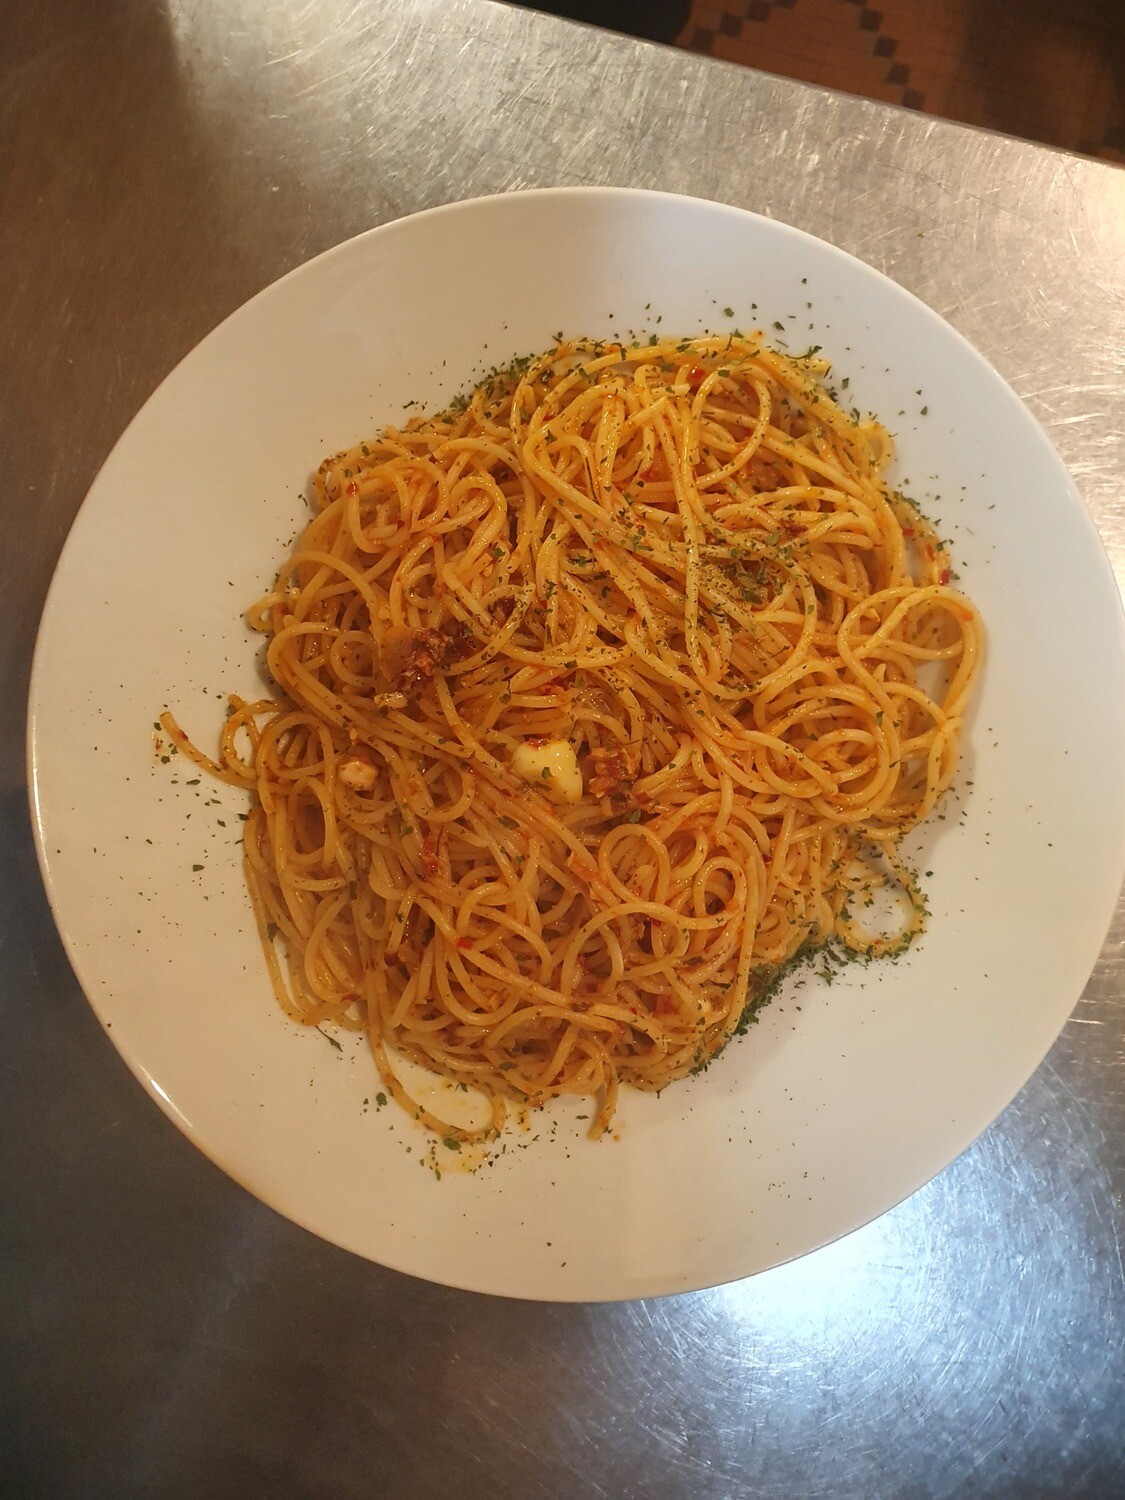 Spaghetti aglio olio: ail, nduja